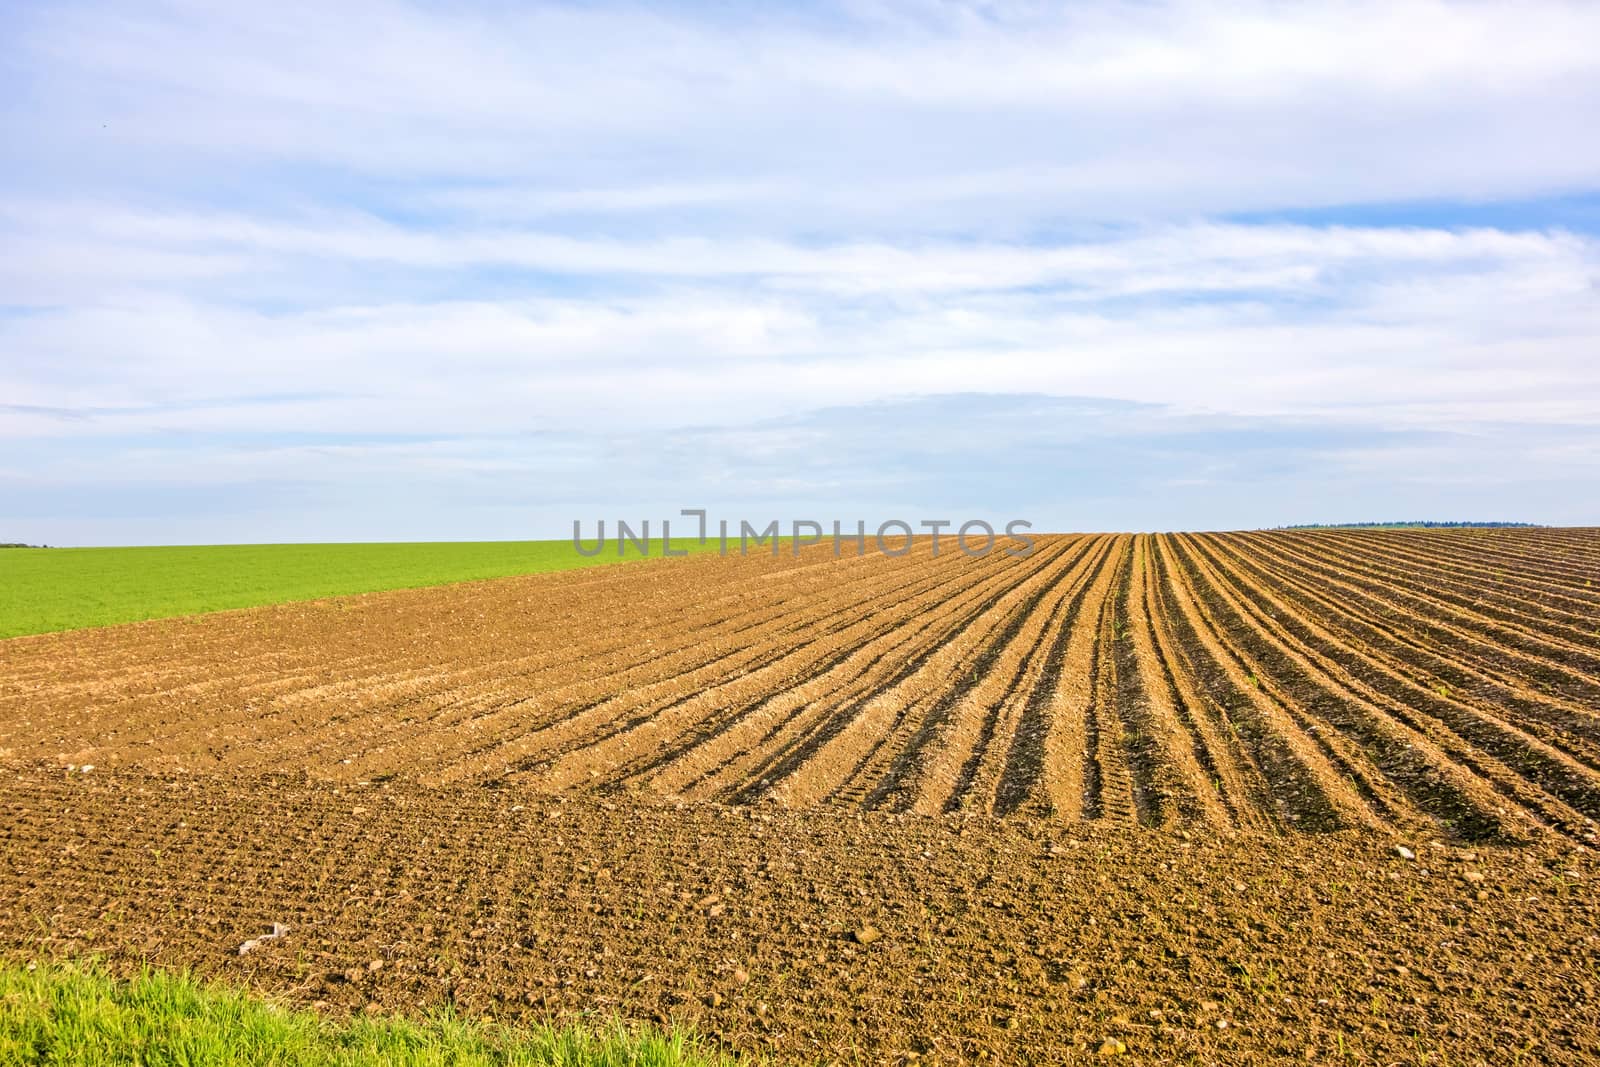 Farmland - brown field, blue sky, rural landscape